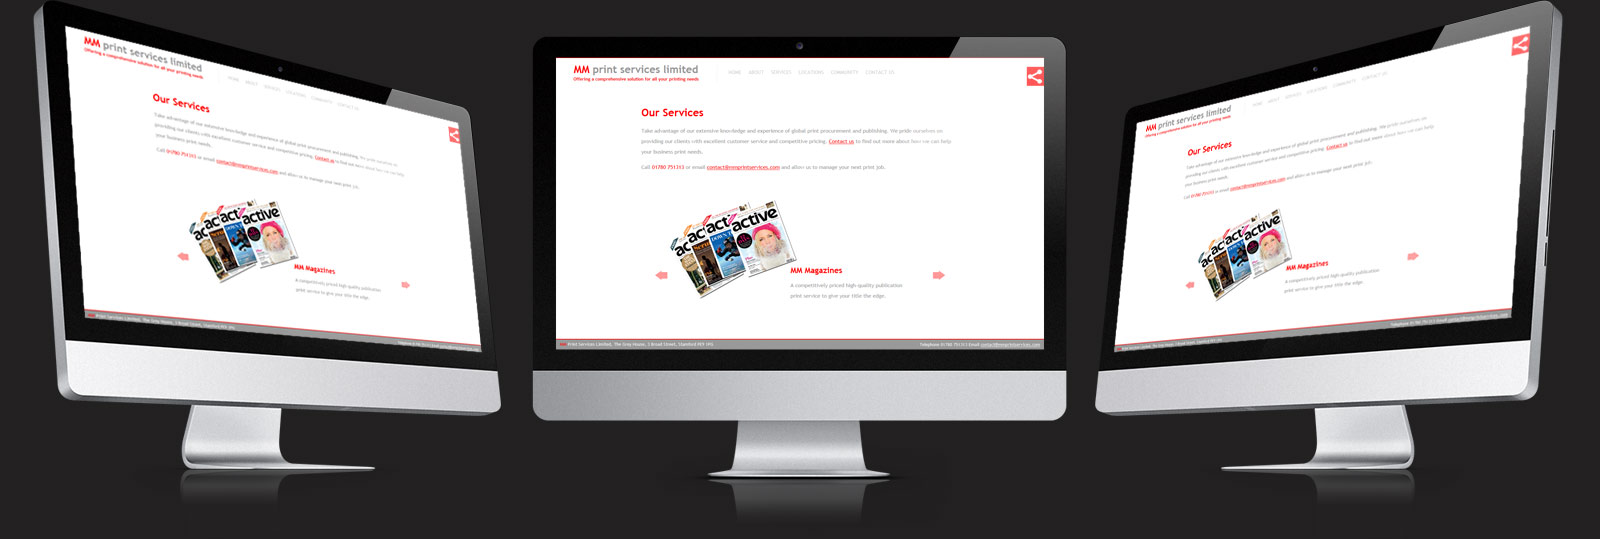 Stamford Web Design - MM Print Services